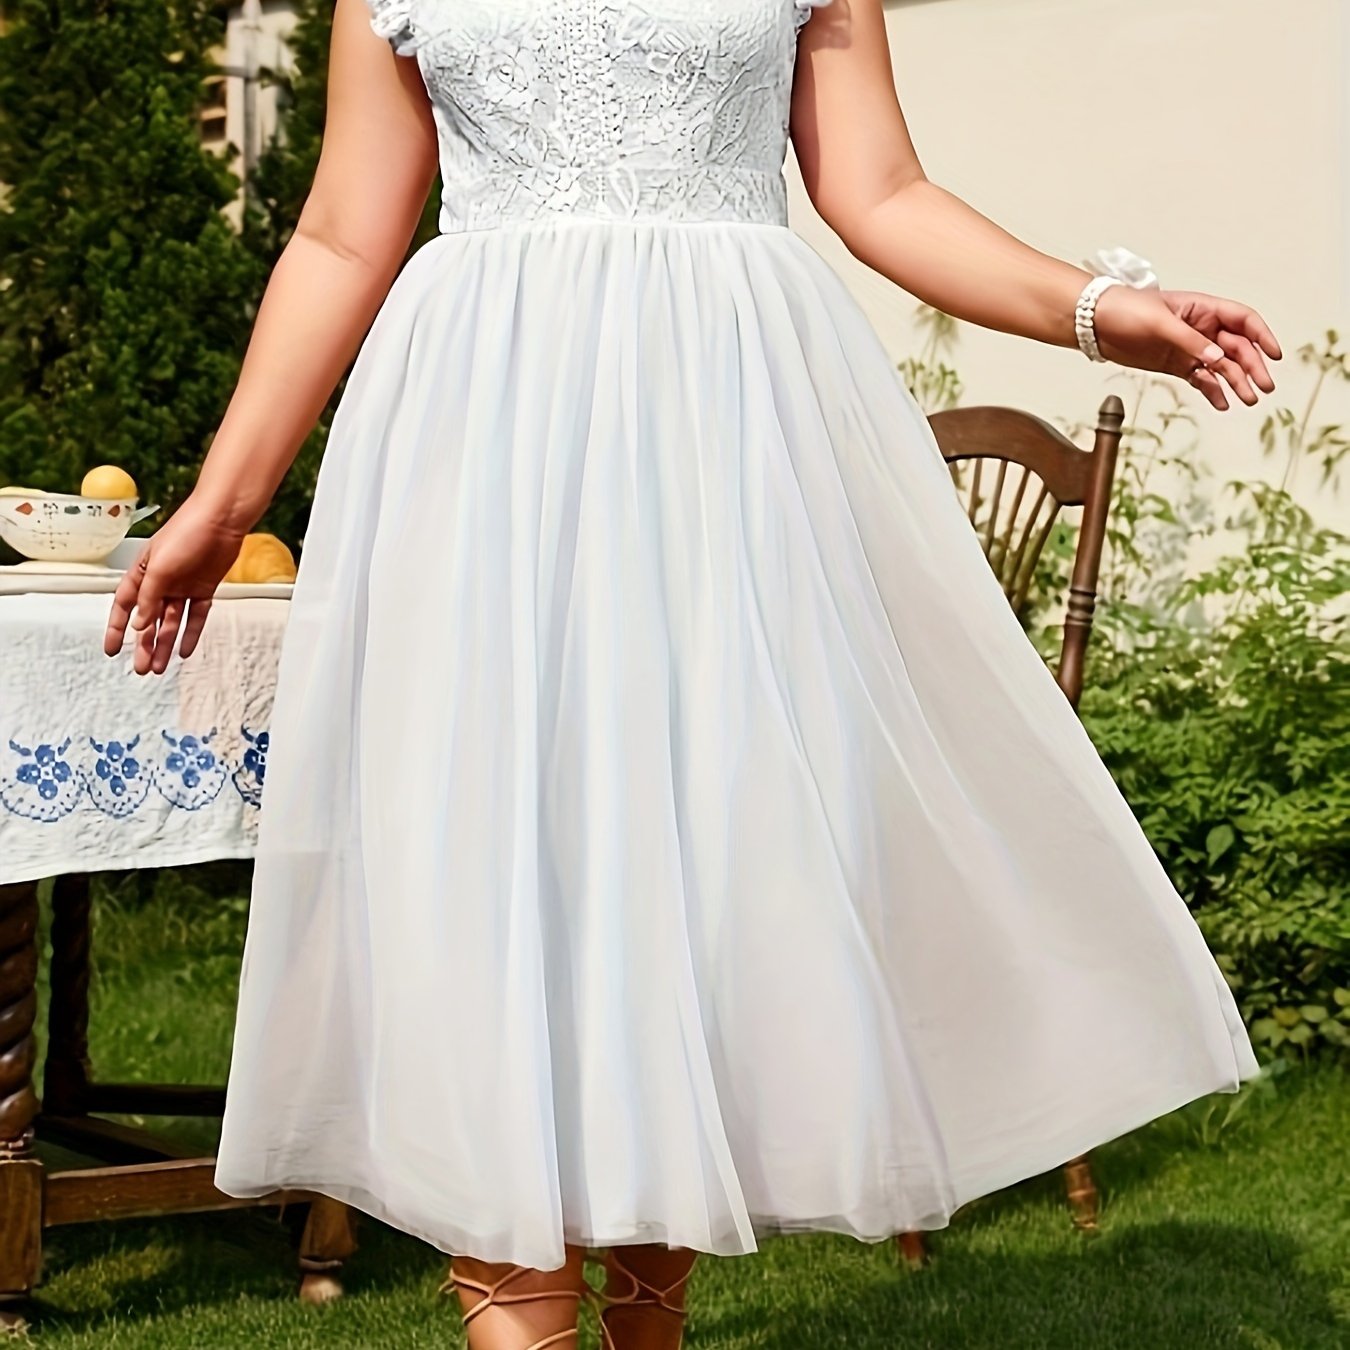 Antmvs Plus Size Elegant Bridesmaid Dress, Women's Plus Contrast Lace Ruffle Trim Mesh Overlay Formal Party Dress